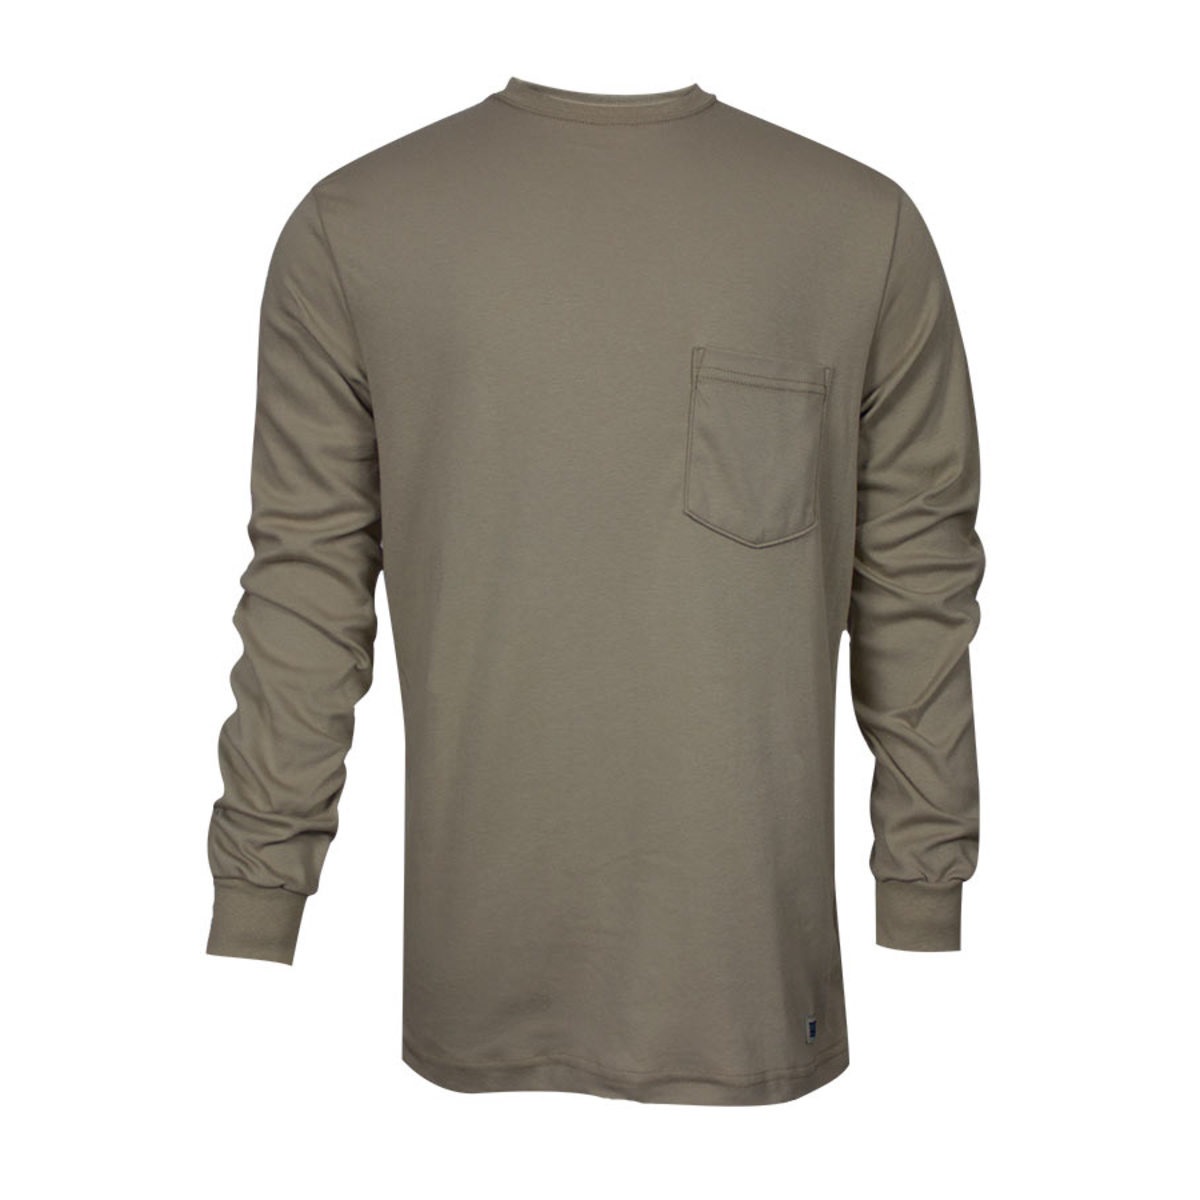 FR Classic Cotton Long Sleeve T-Shirt 100 Percent FR Cotton in khaki